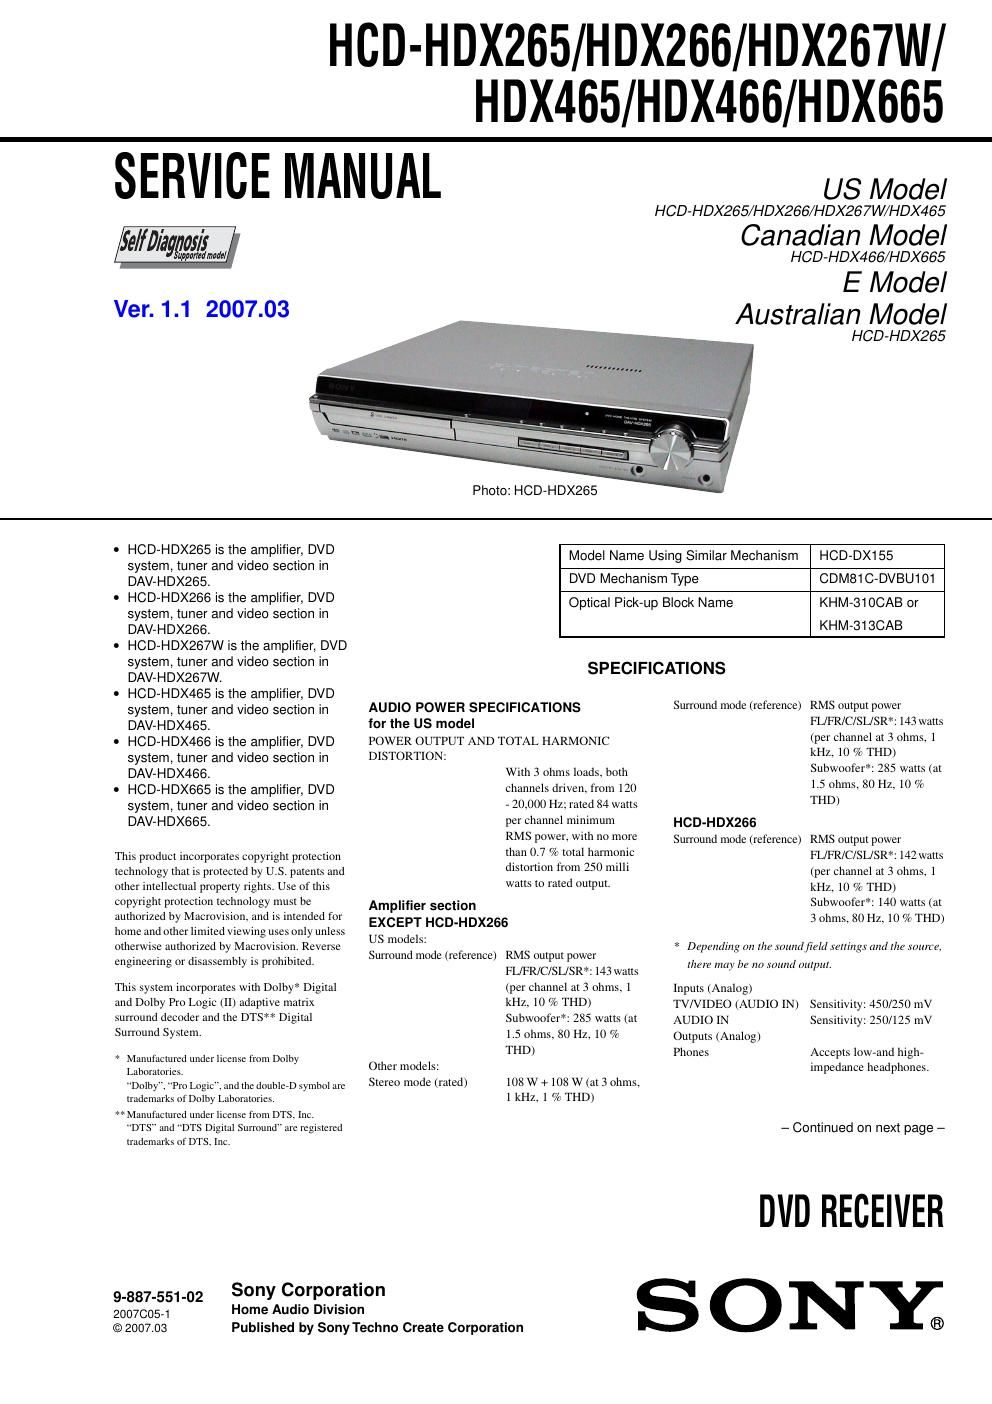 sony hcd hdx 265 hcd hdx665 series dvd receiver